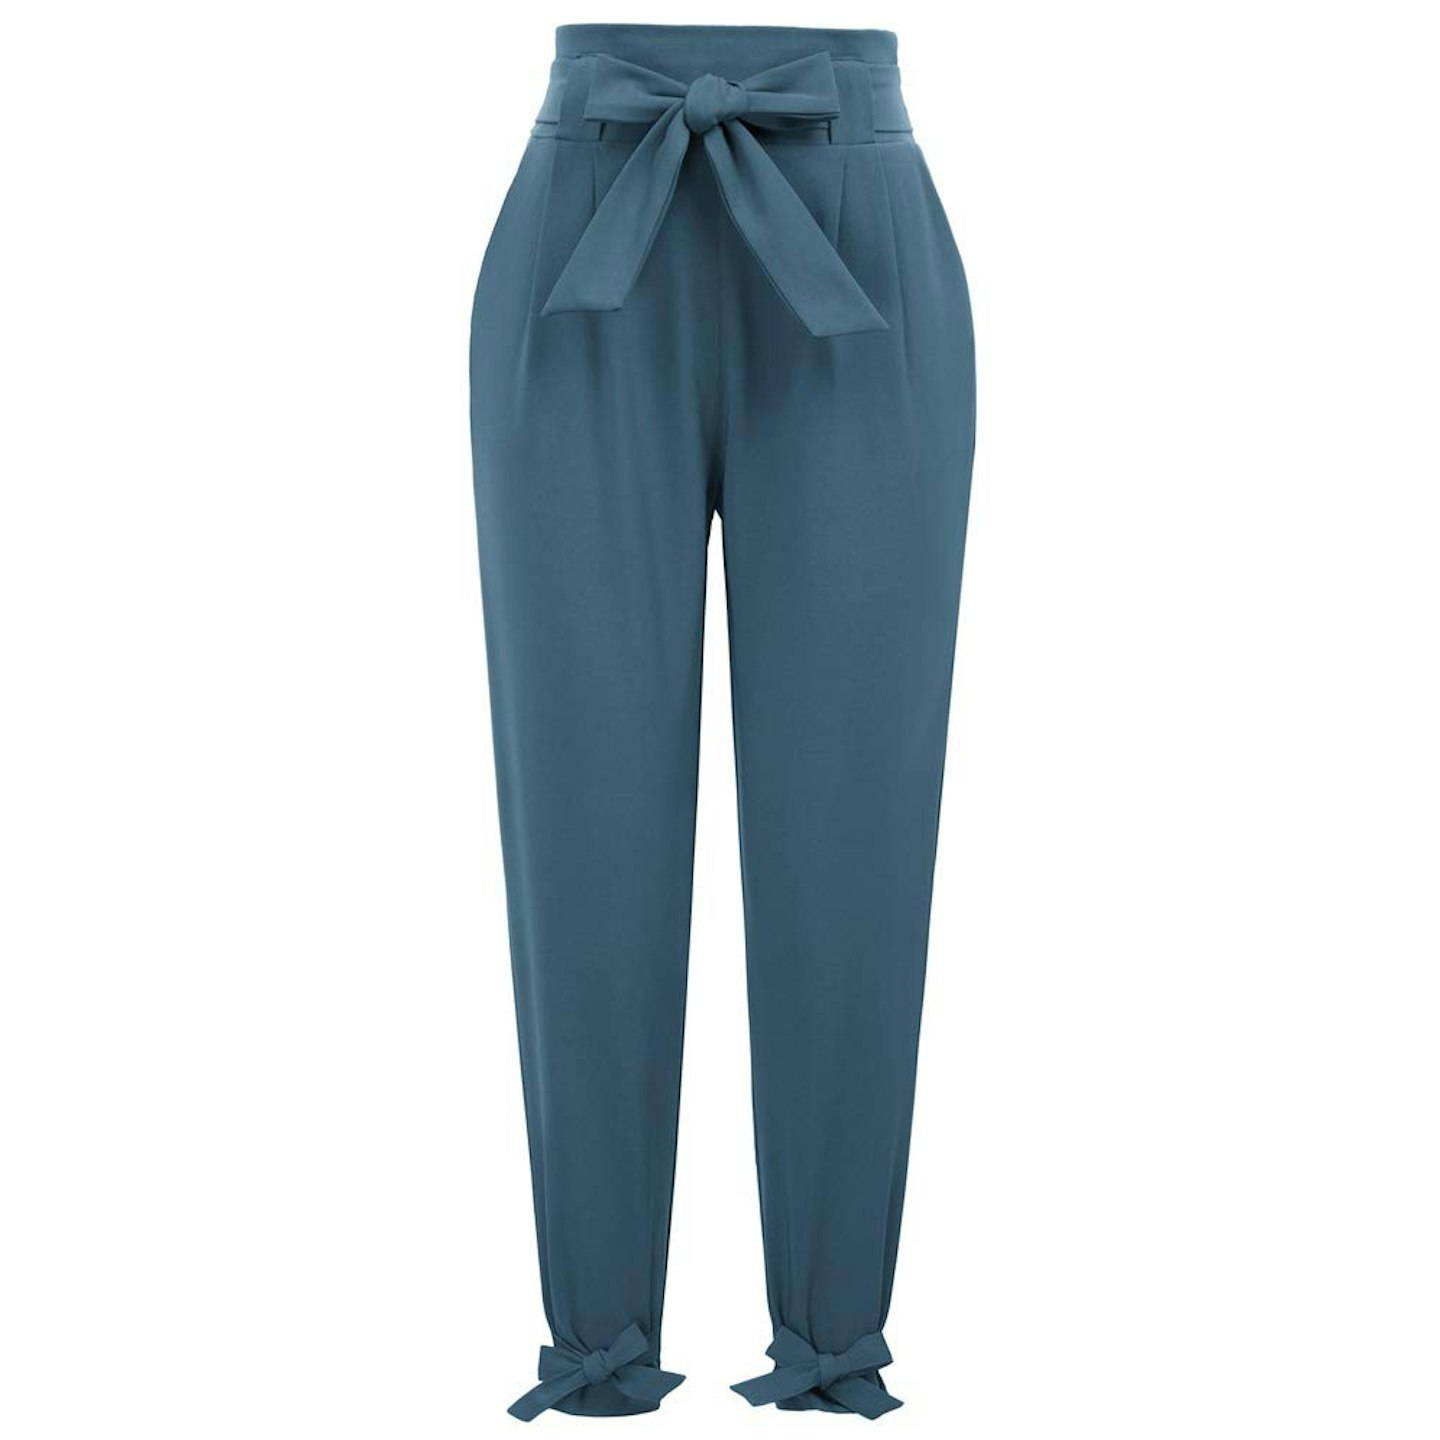 Grace Karin, High-Waist Bow-Tie Pencil Trousers, £21.99